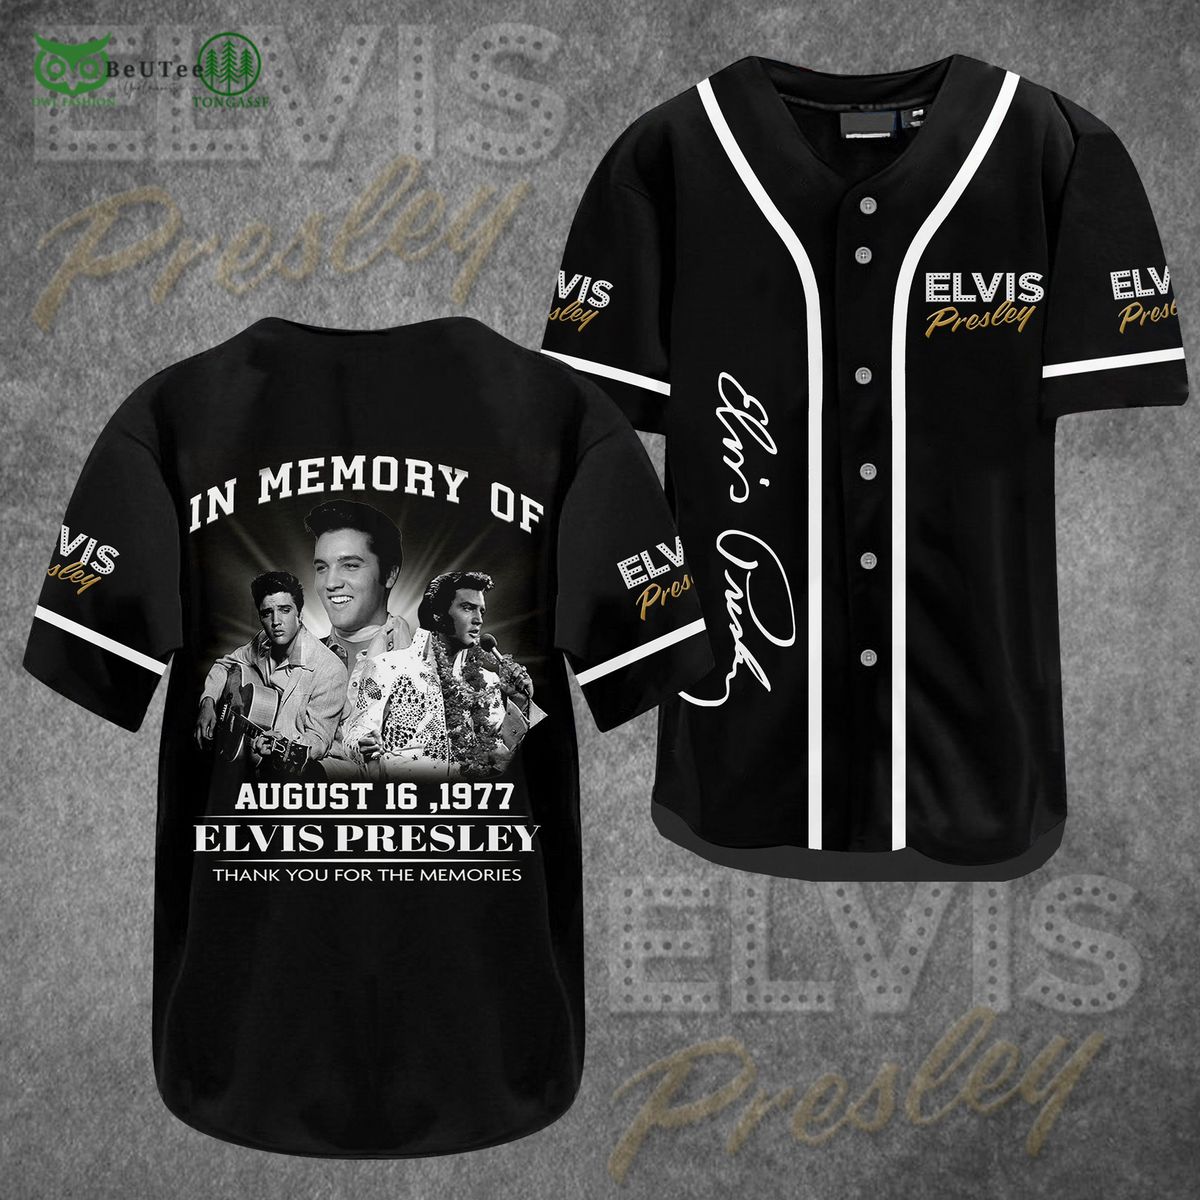 elvis presley in the ghetto black white baseball jersey shirt 1 23xME